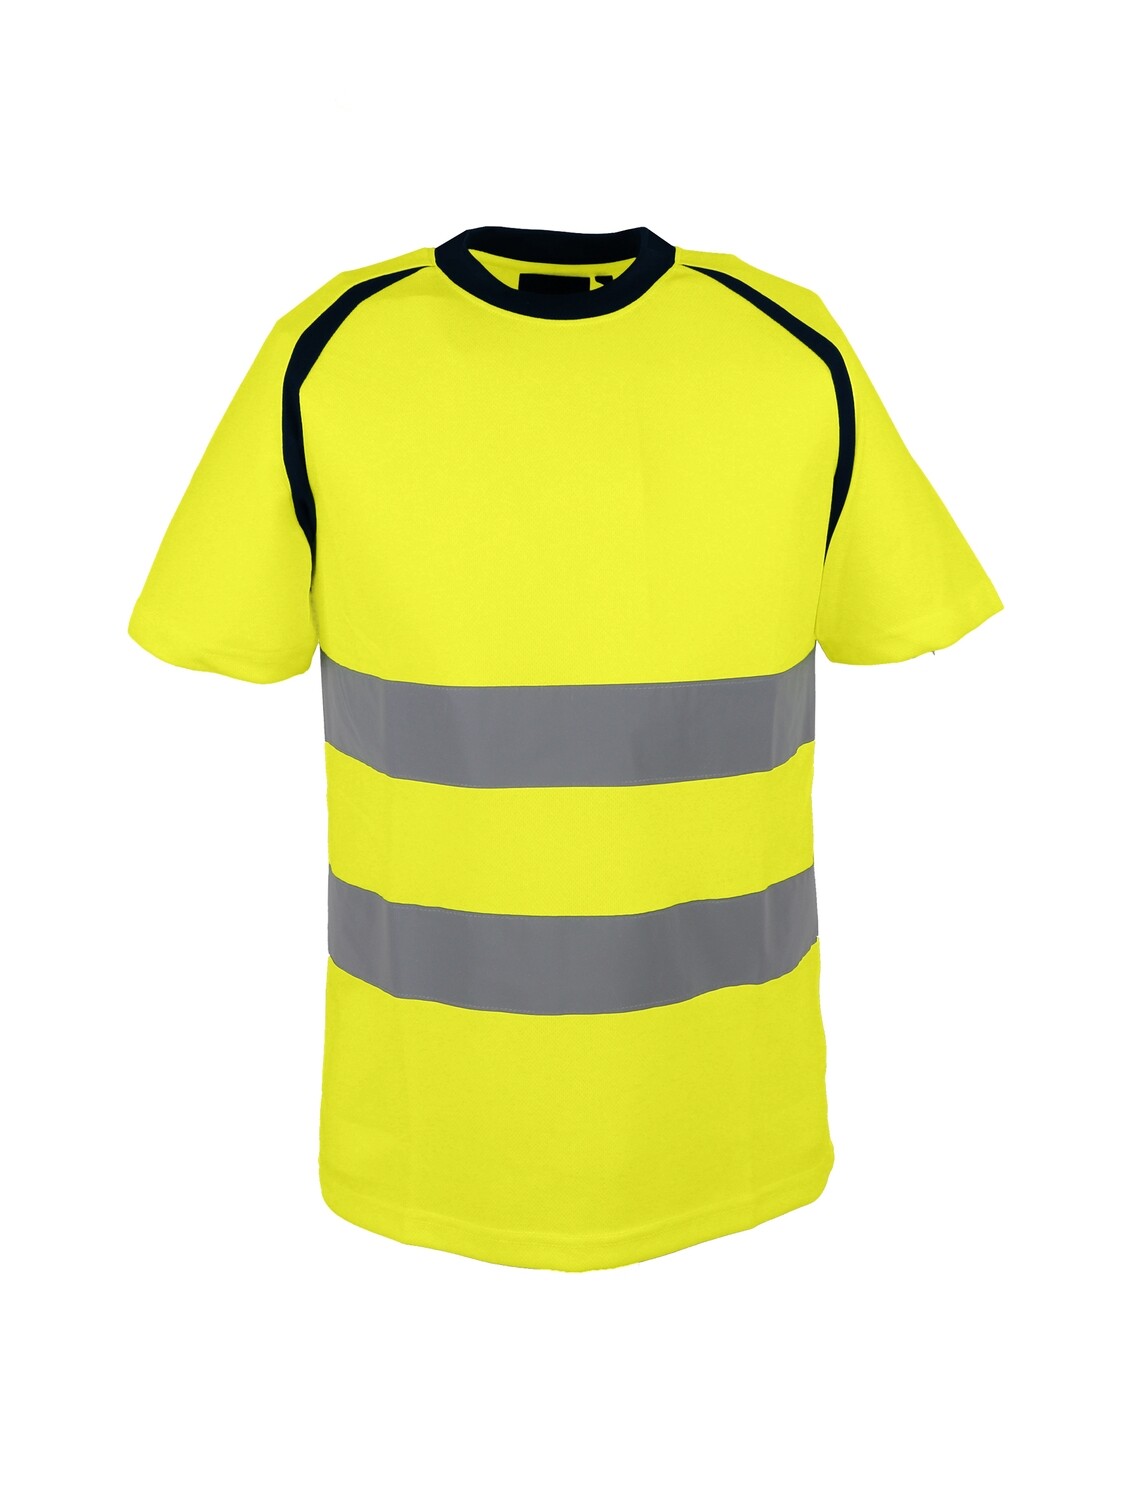 T-shirt jaune. 100% polyester bird-eye. 150 gm2.